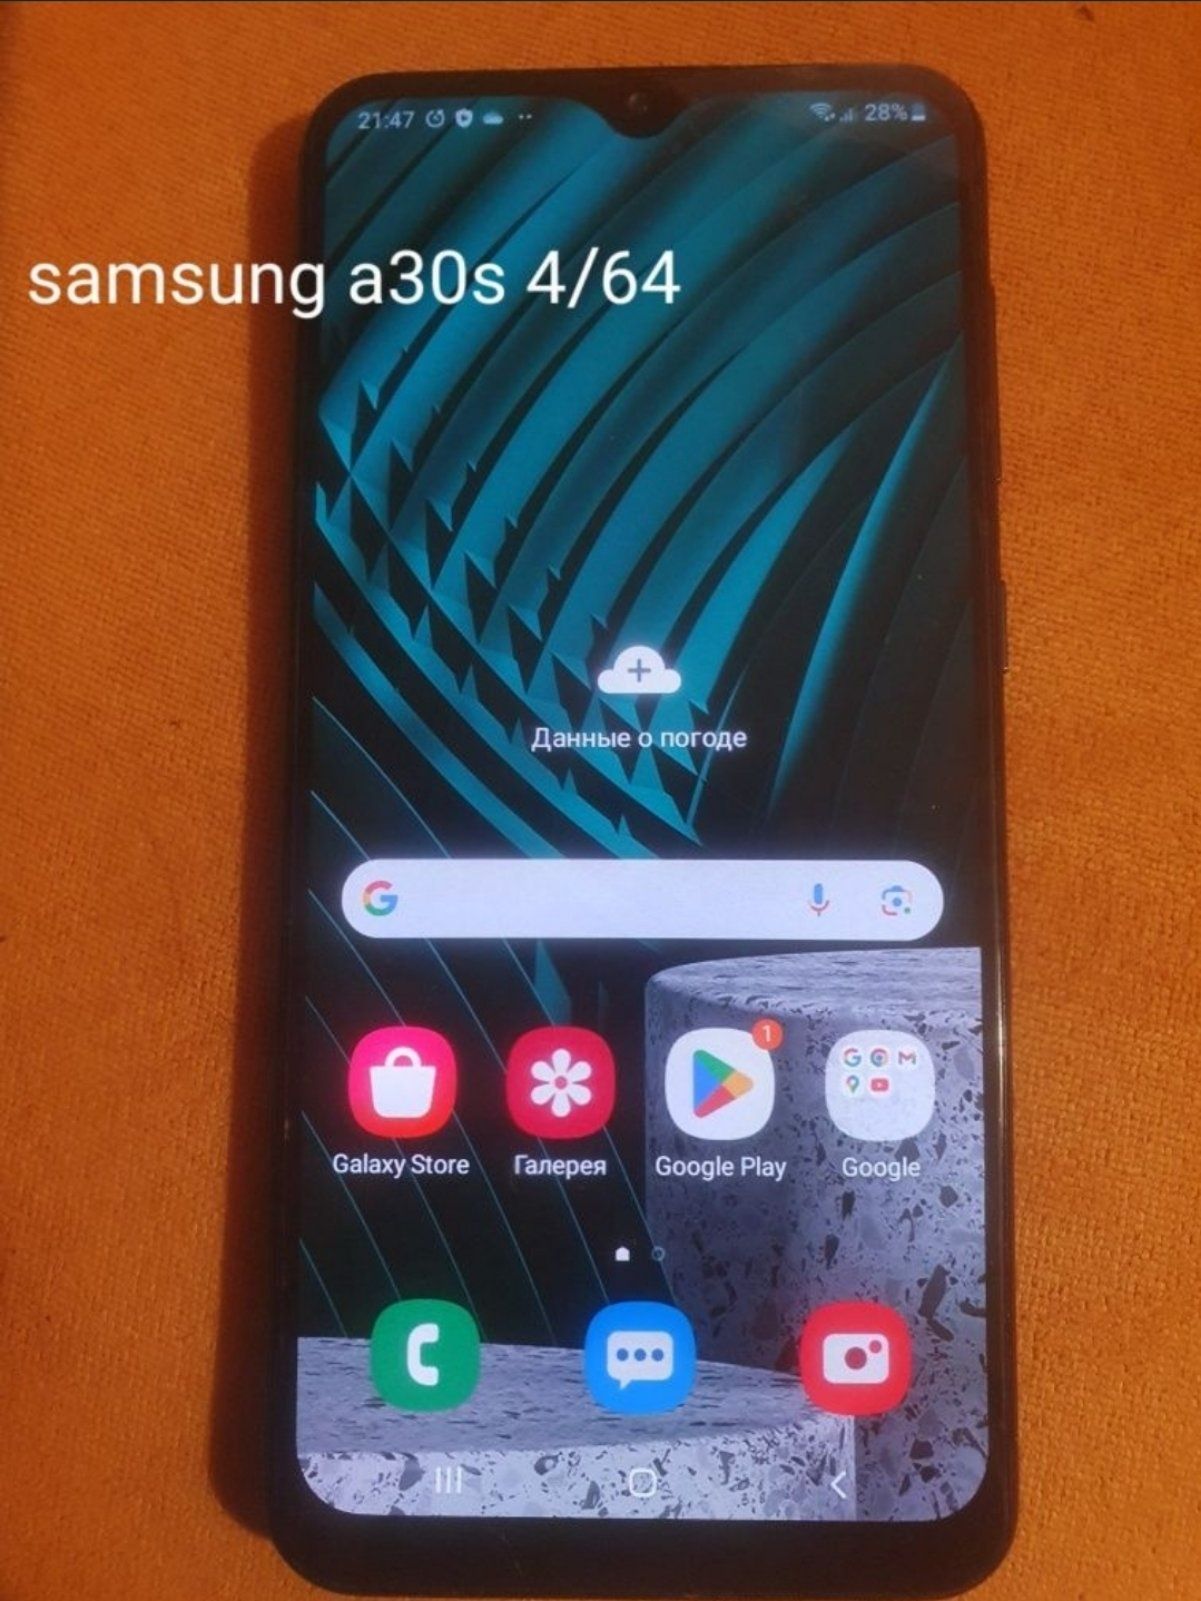 Samsung a30s 4/64 gb